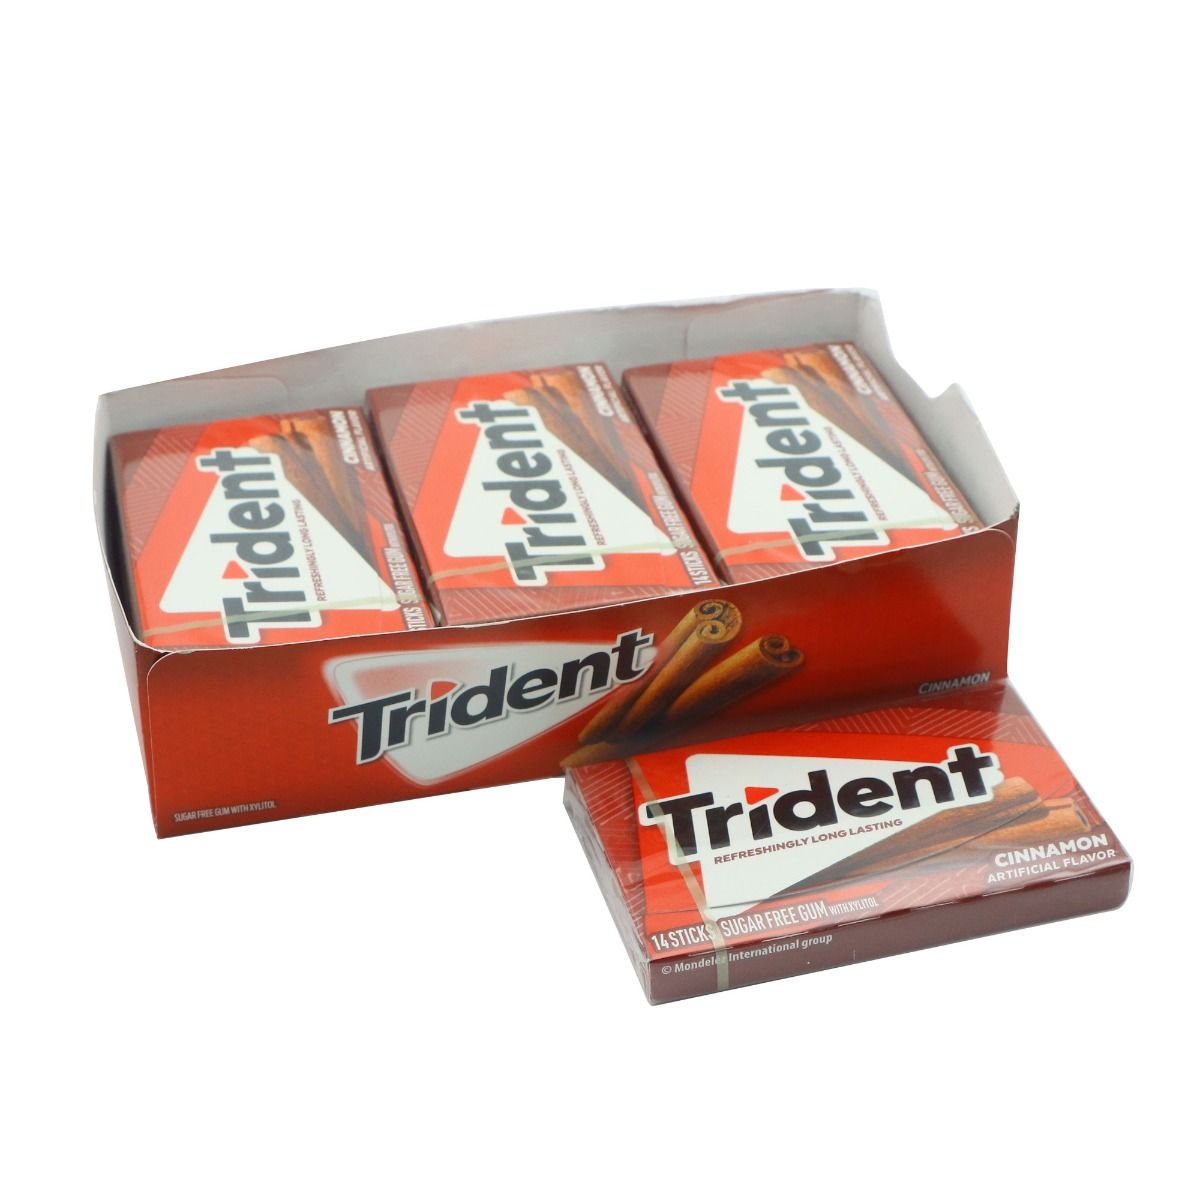 Trident Cinnamon Sugarfree Gum, 14 Count, Pack of 1 